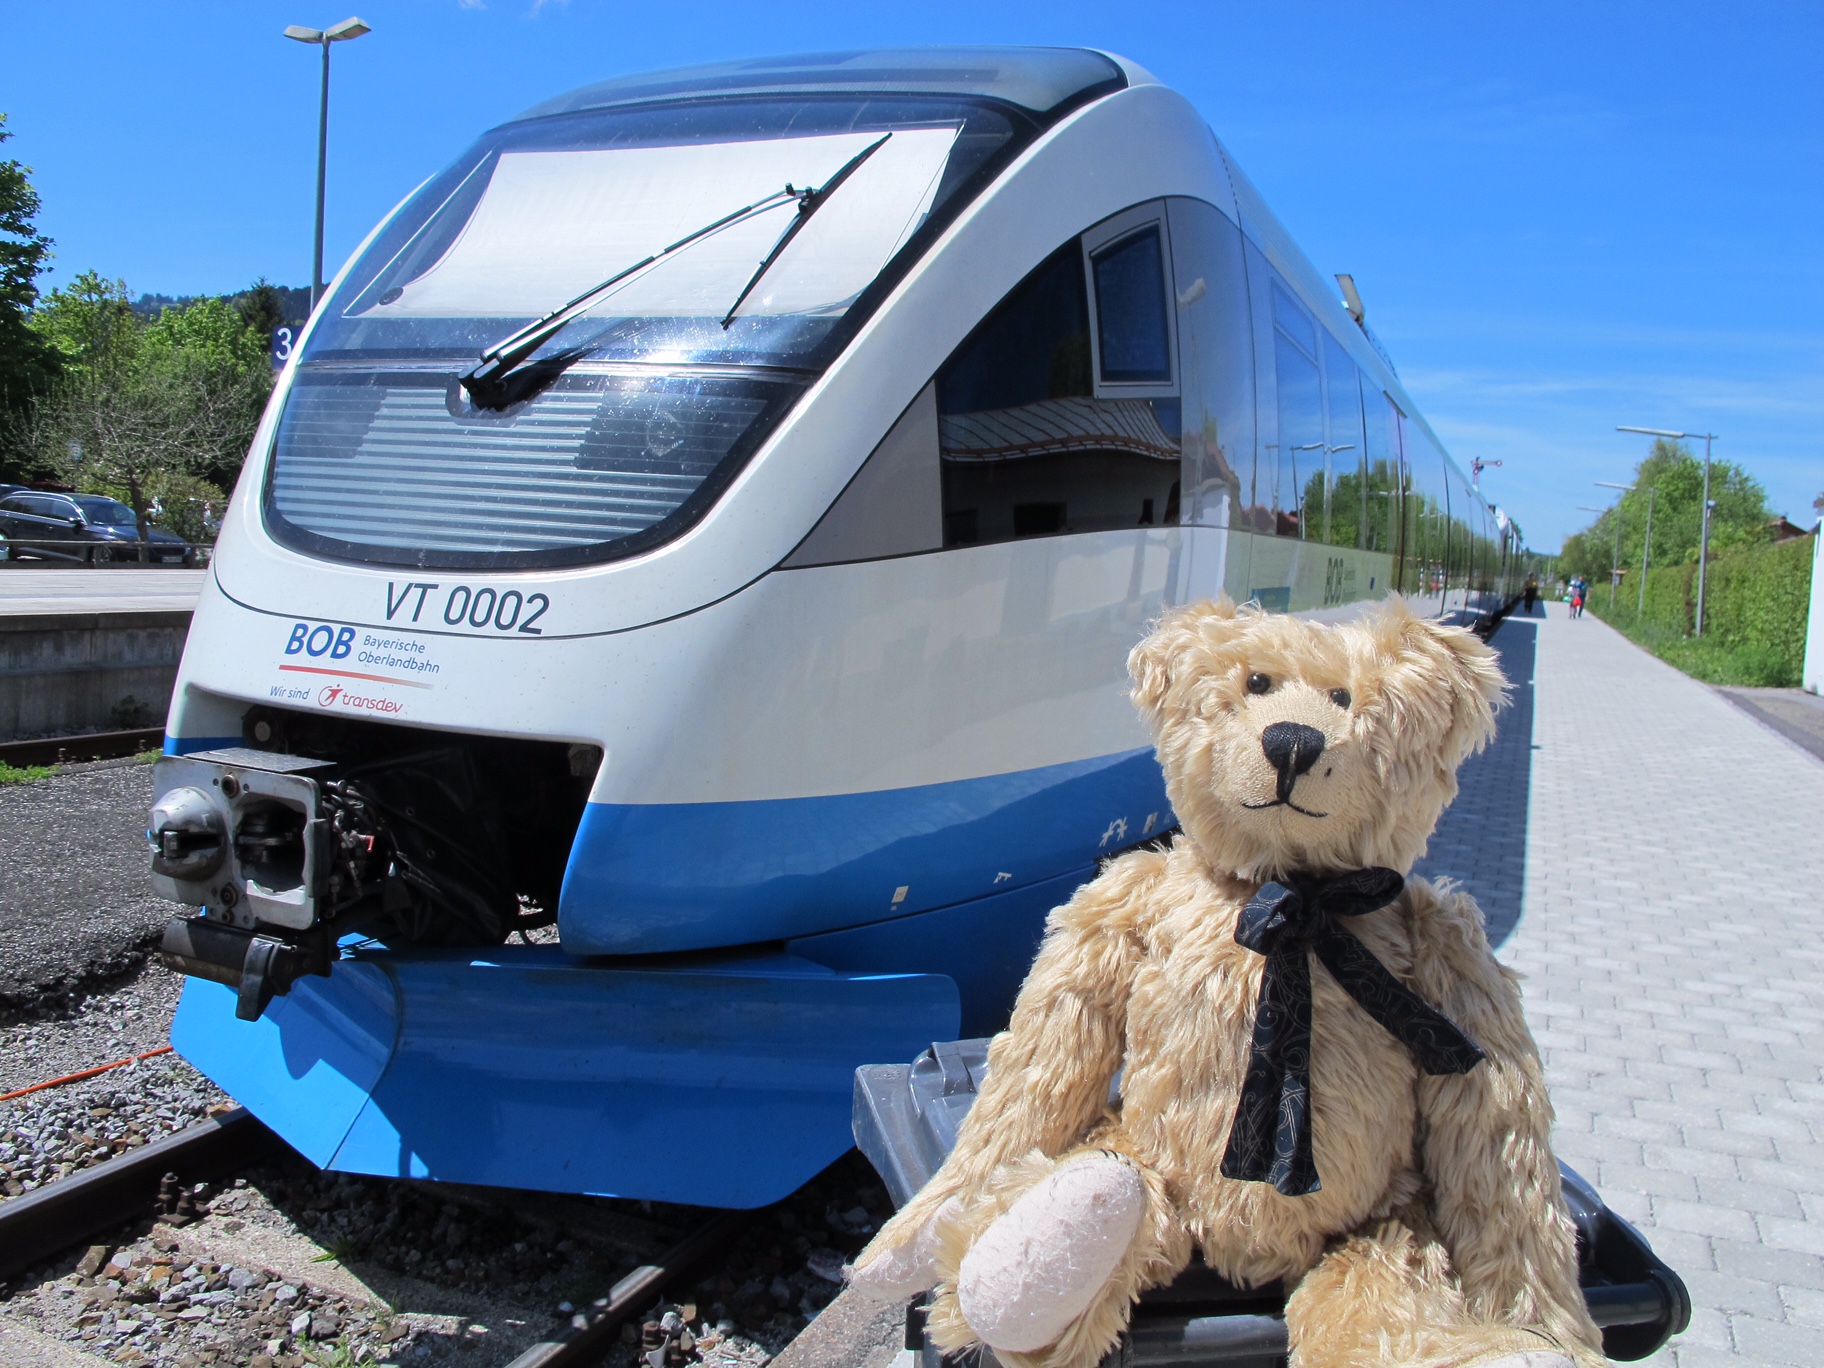 Paris to Munich: The BOB train